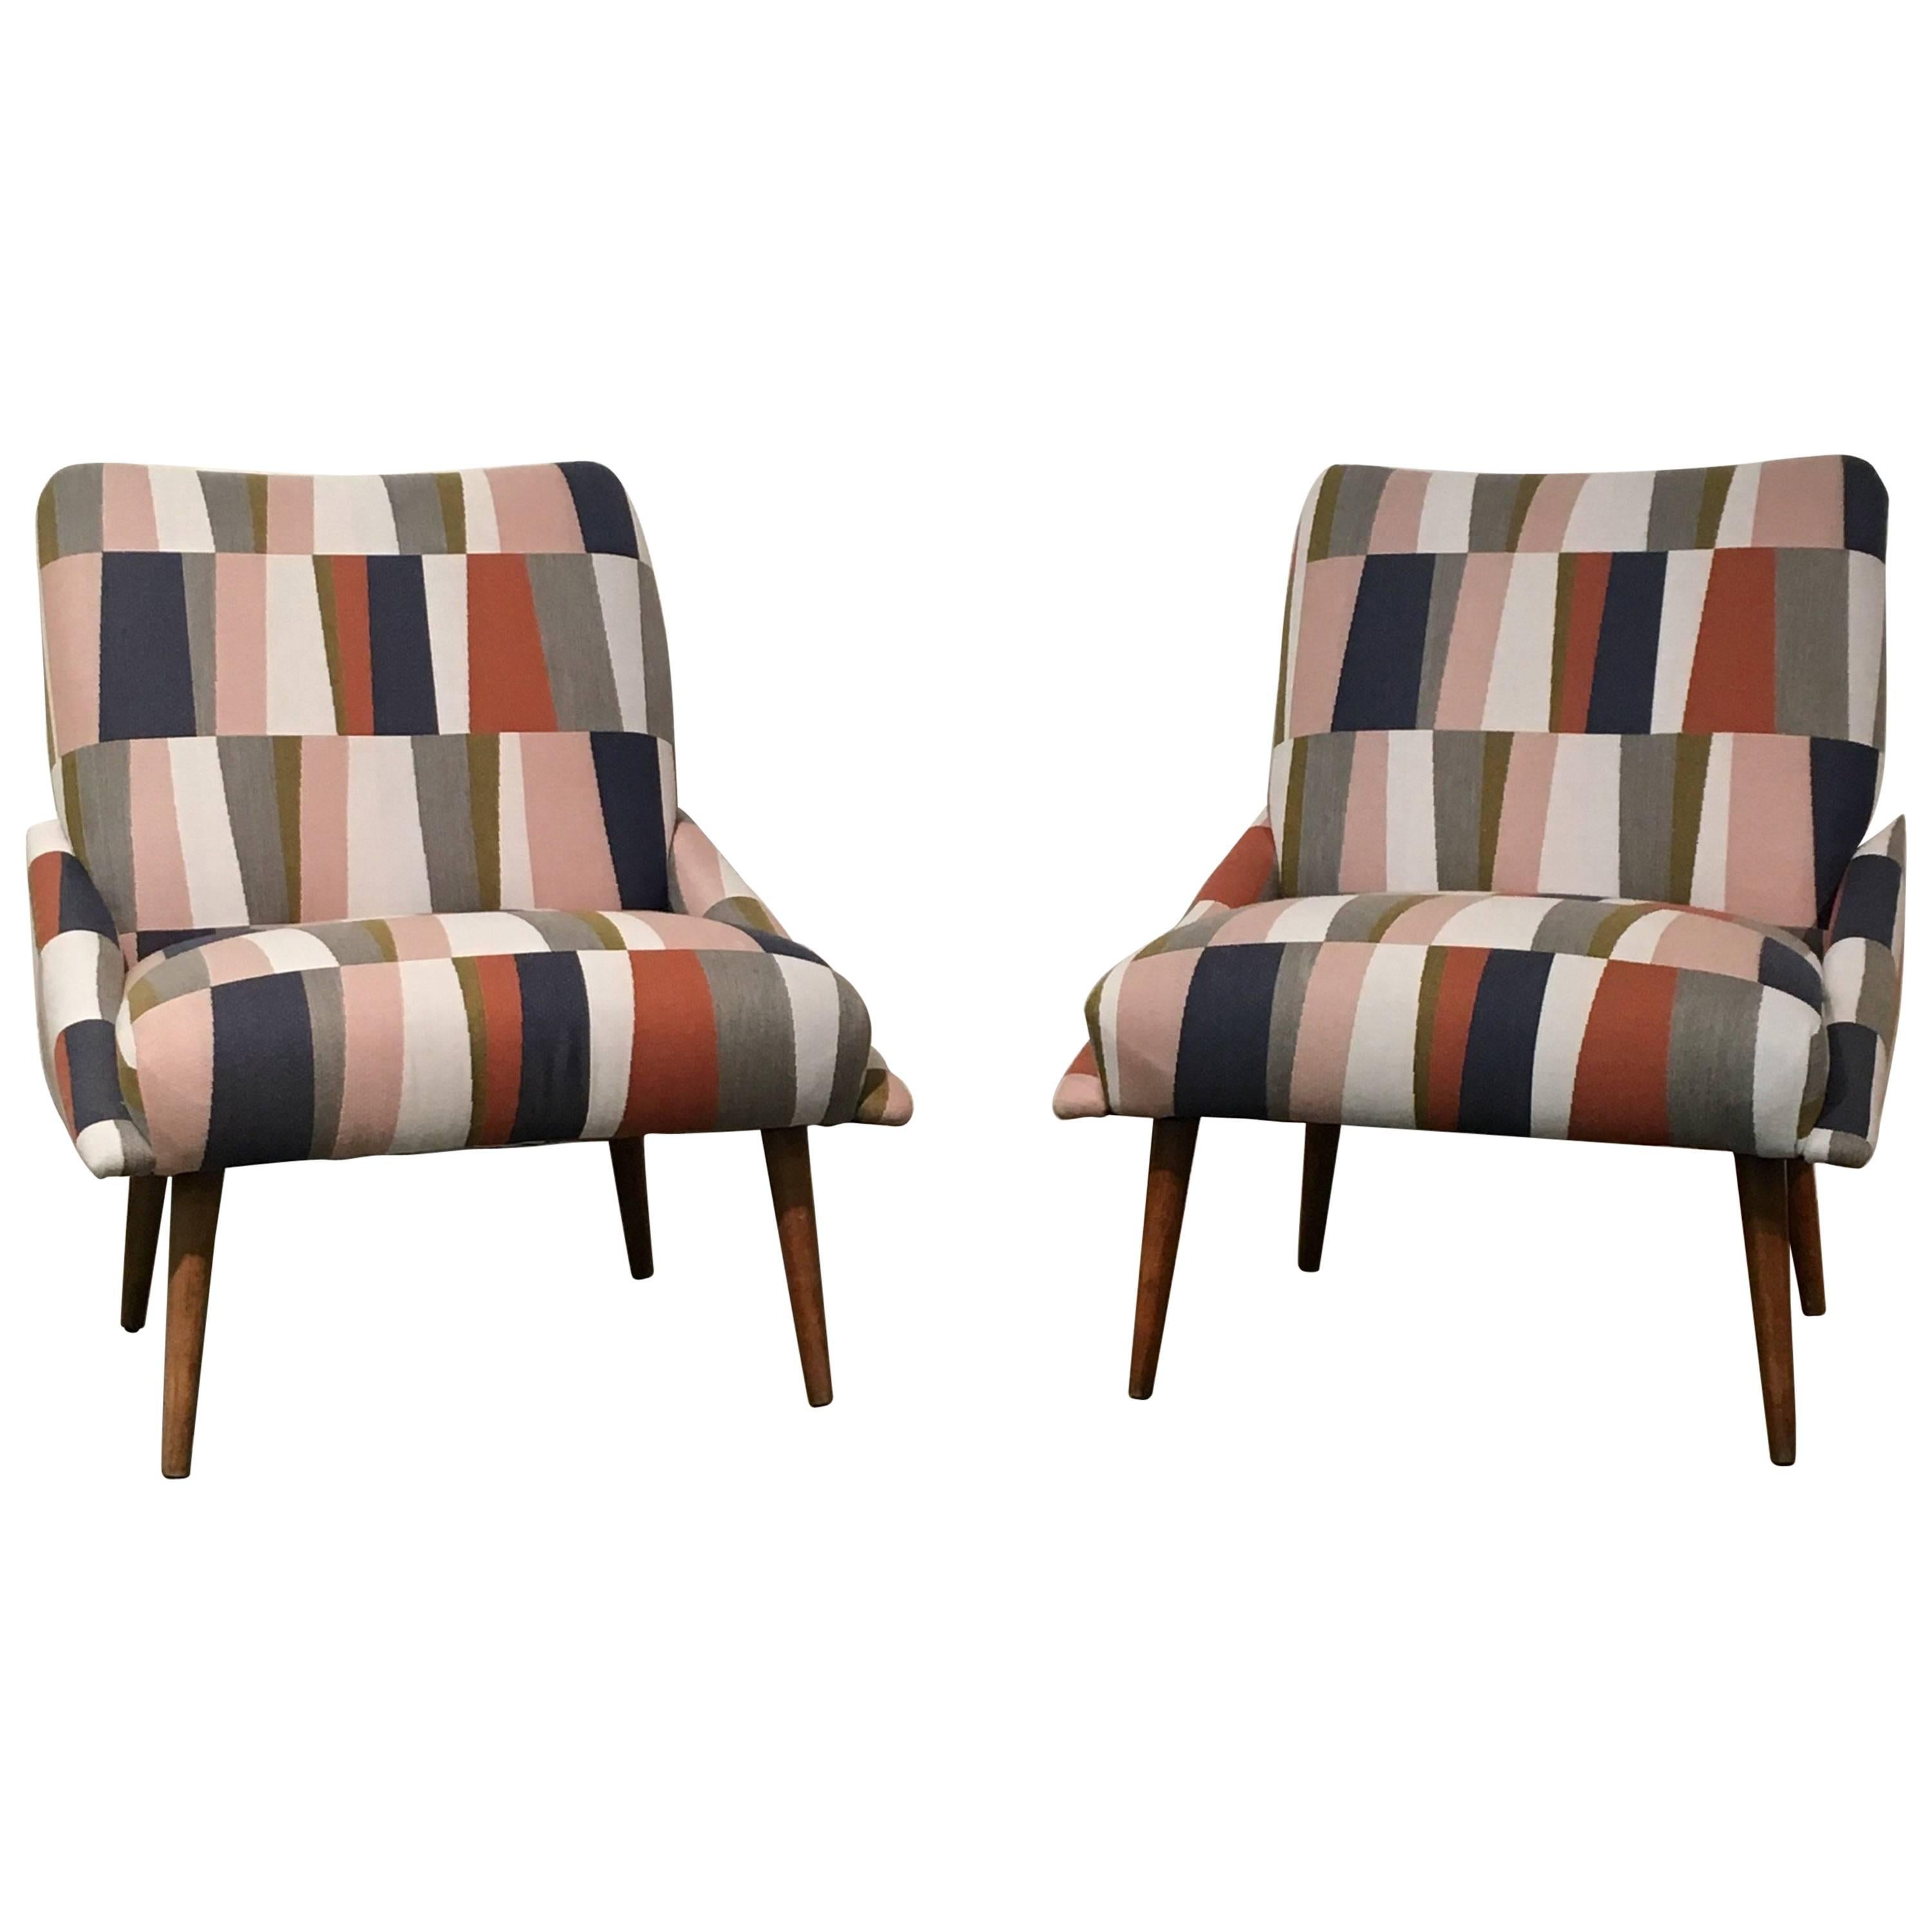 Pair of Restored Geometric Mid-Century Modern Slipper Chairs - Free Shipping